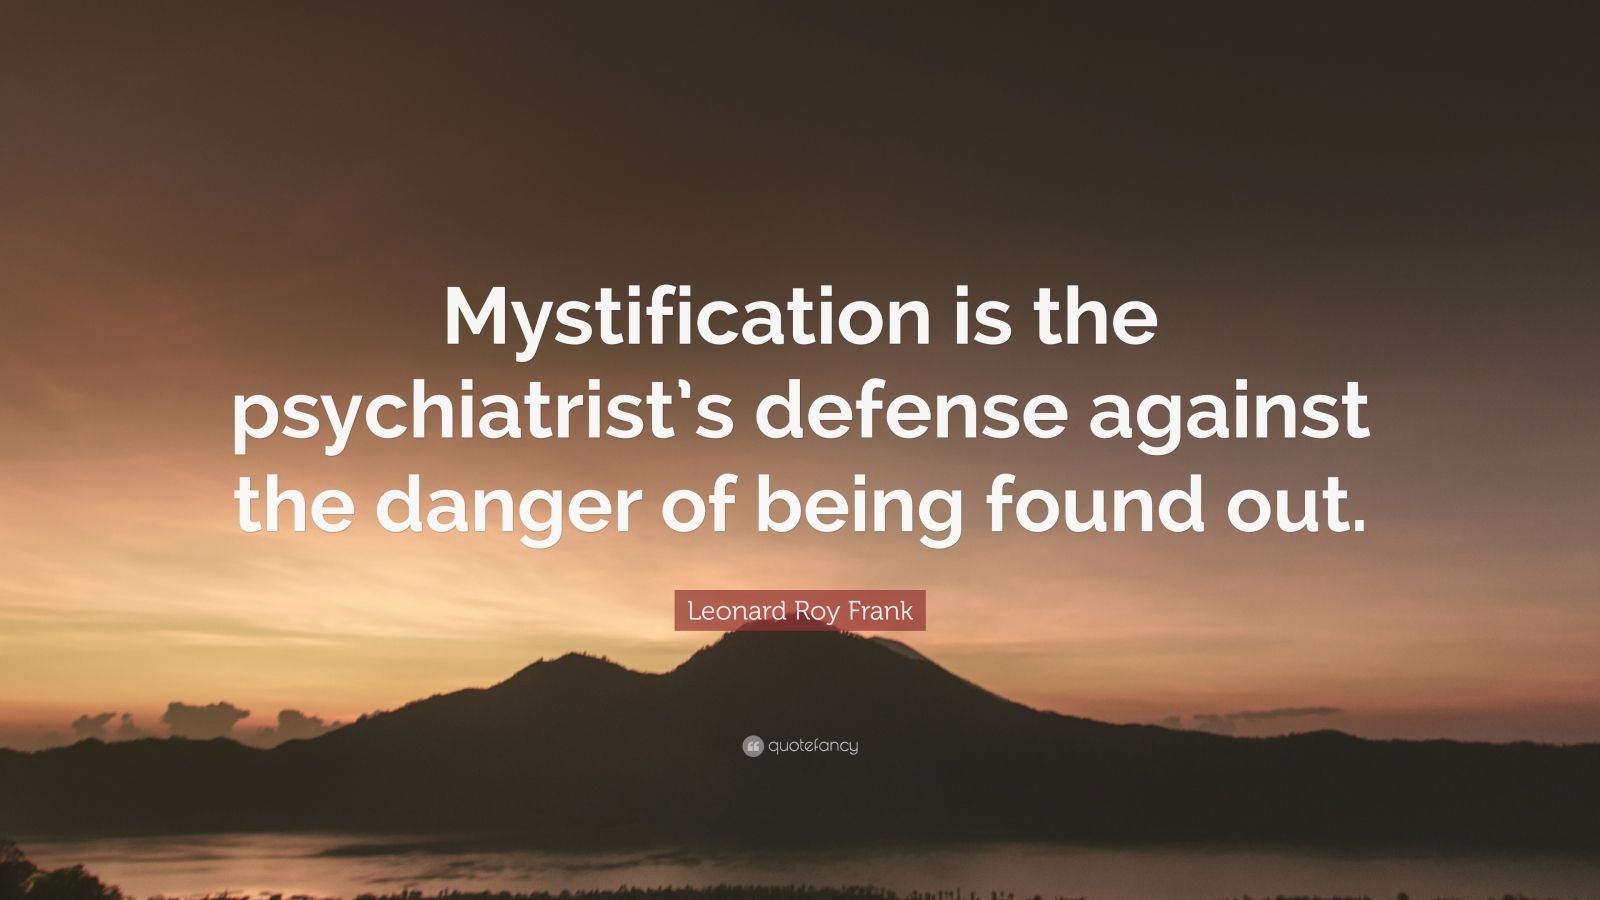 Leonard Roy Frank Quote: “Mystification is the psychiatrist’s defense ...